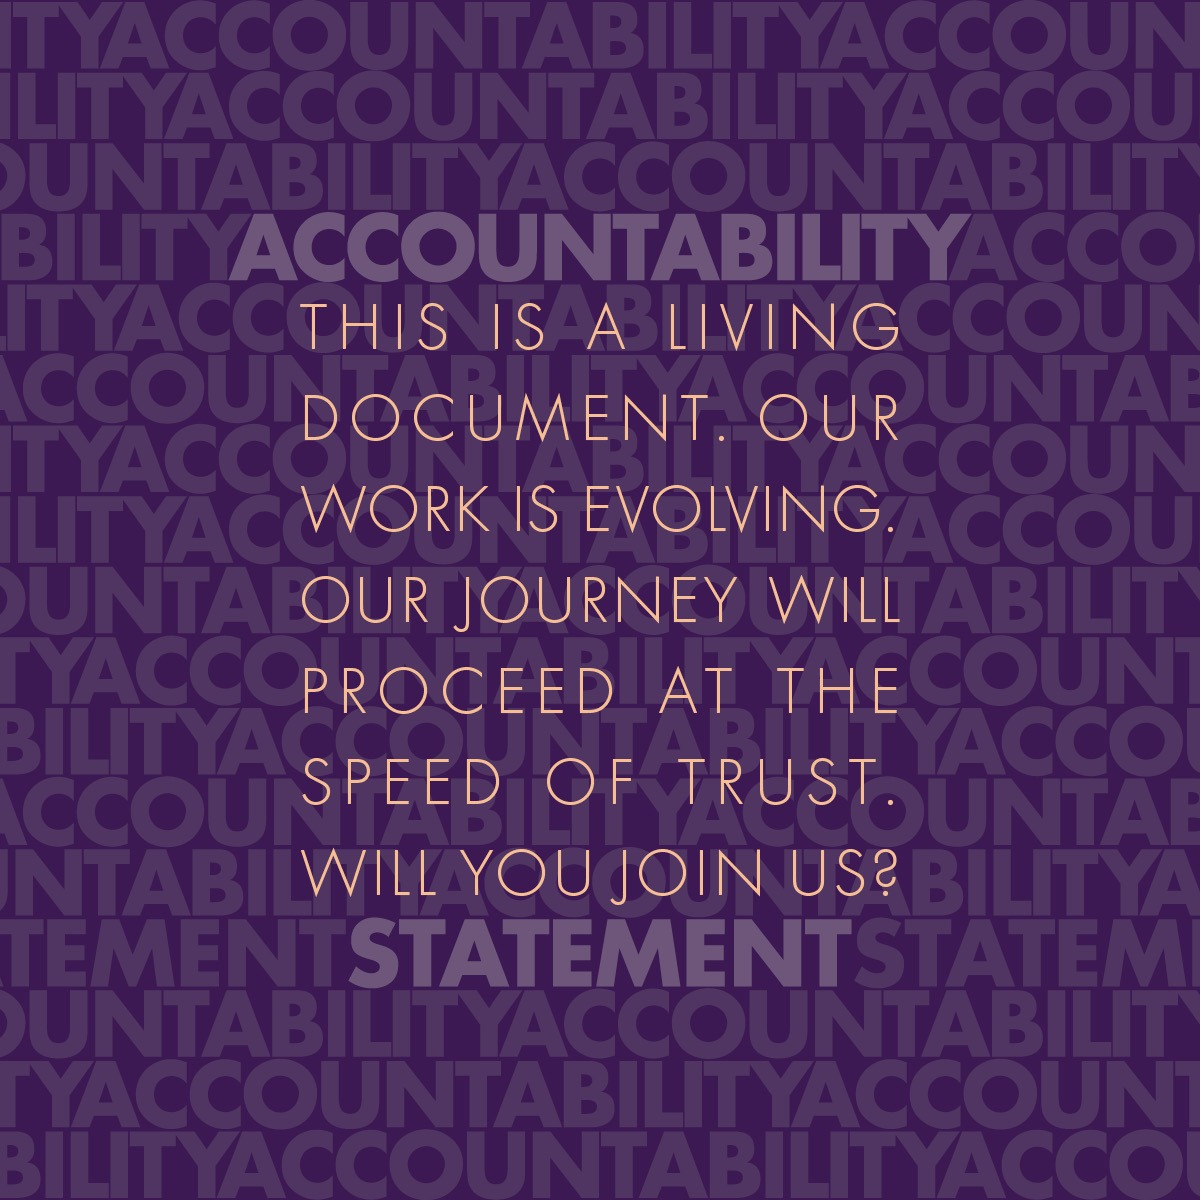 WAM Accountability Plan